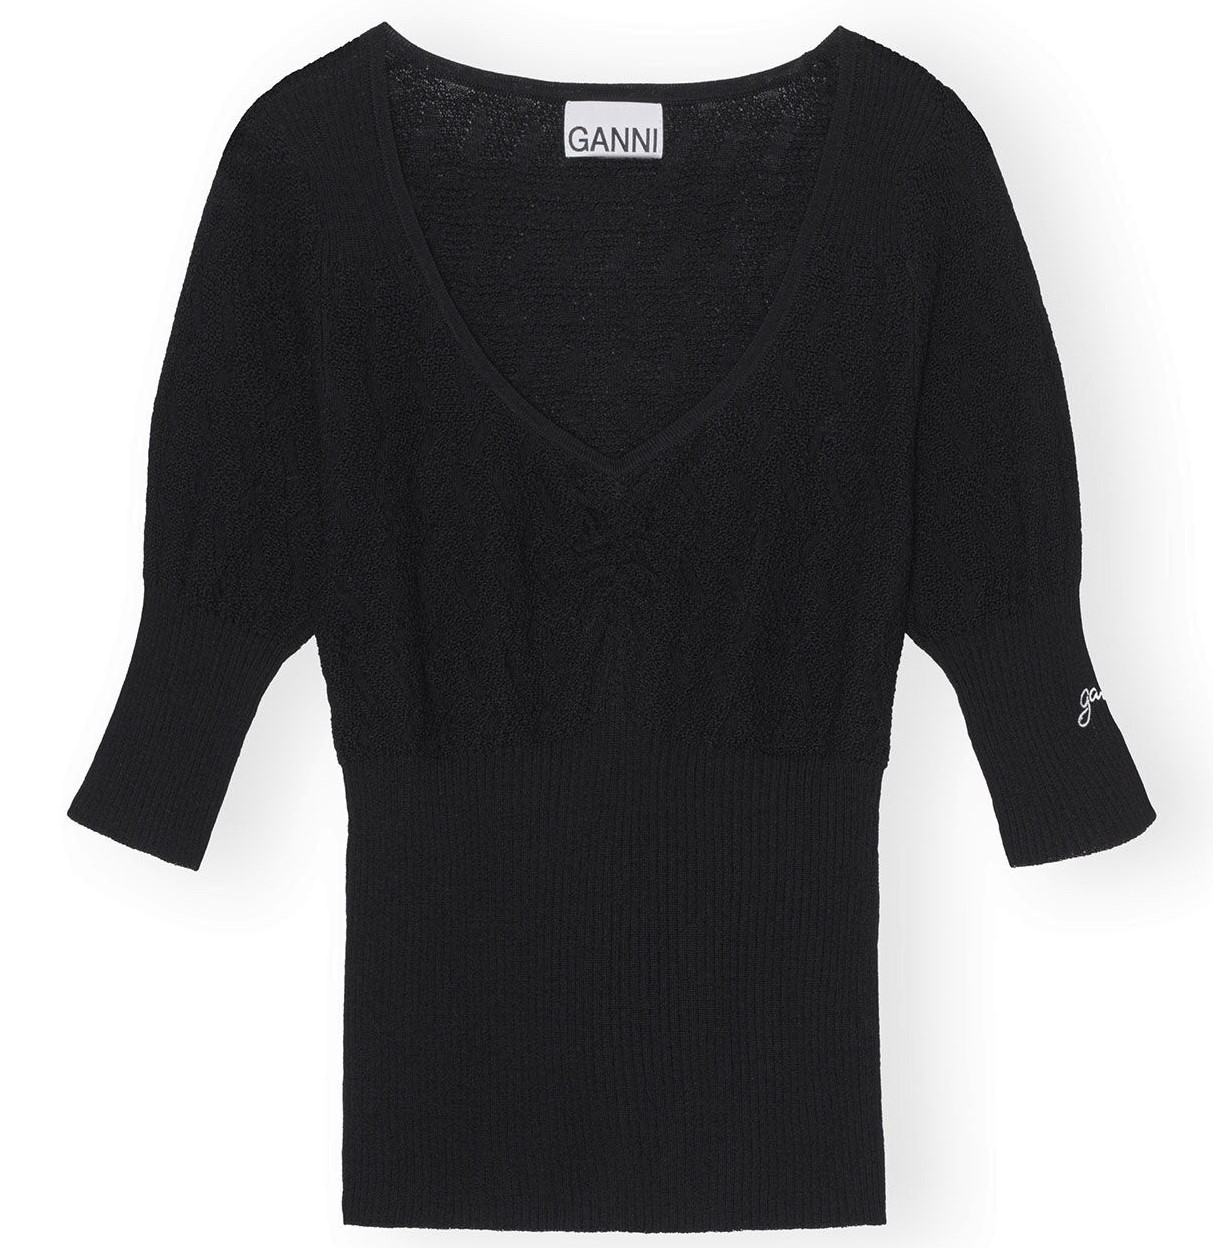 GANNI Merino Knit Pullover in Black XS